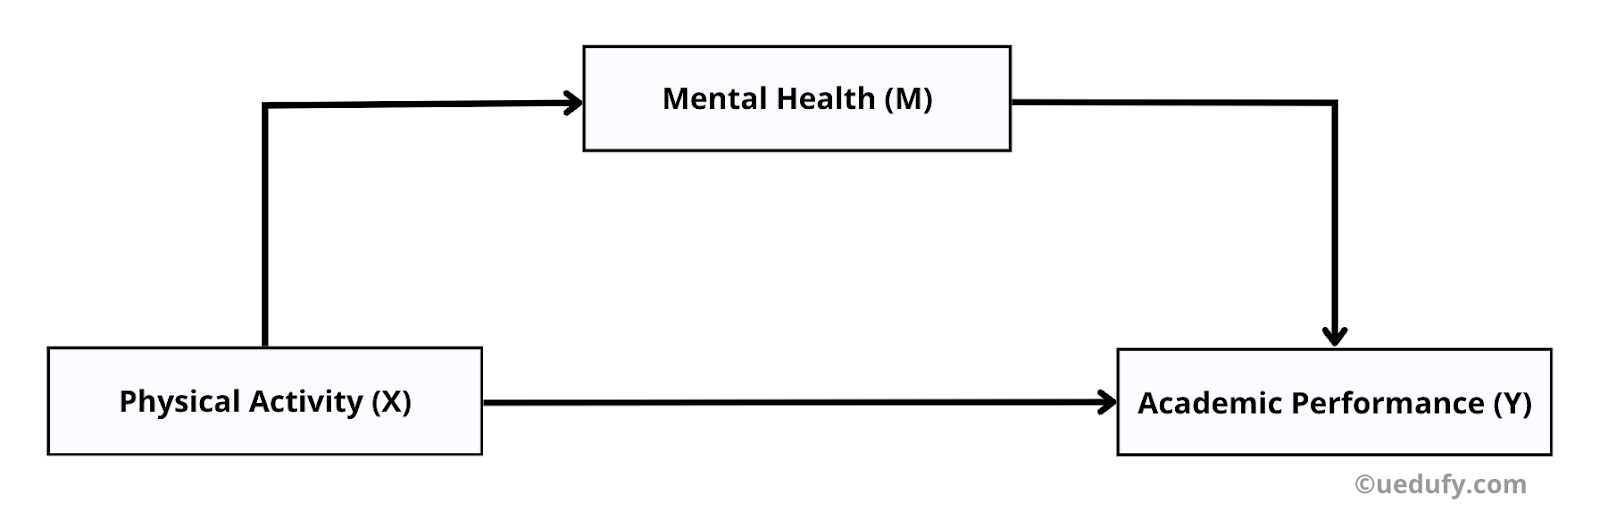 Path diagram research idea 4 (mediation analysis). Source: uedufy.com 